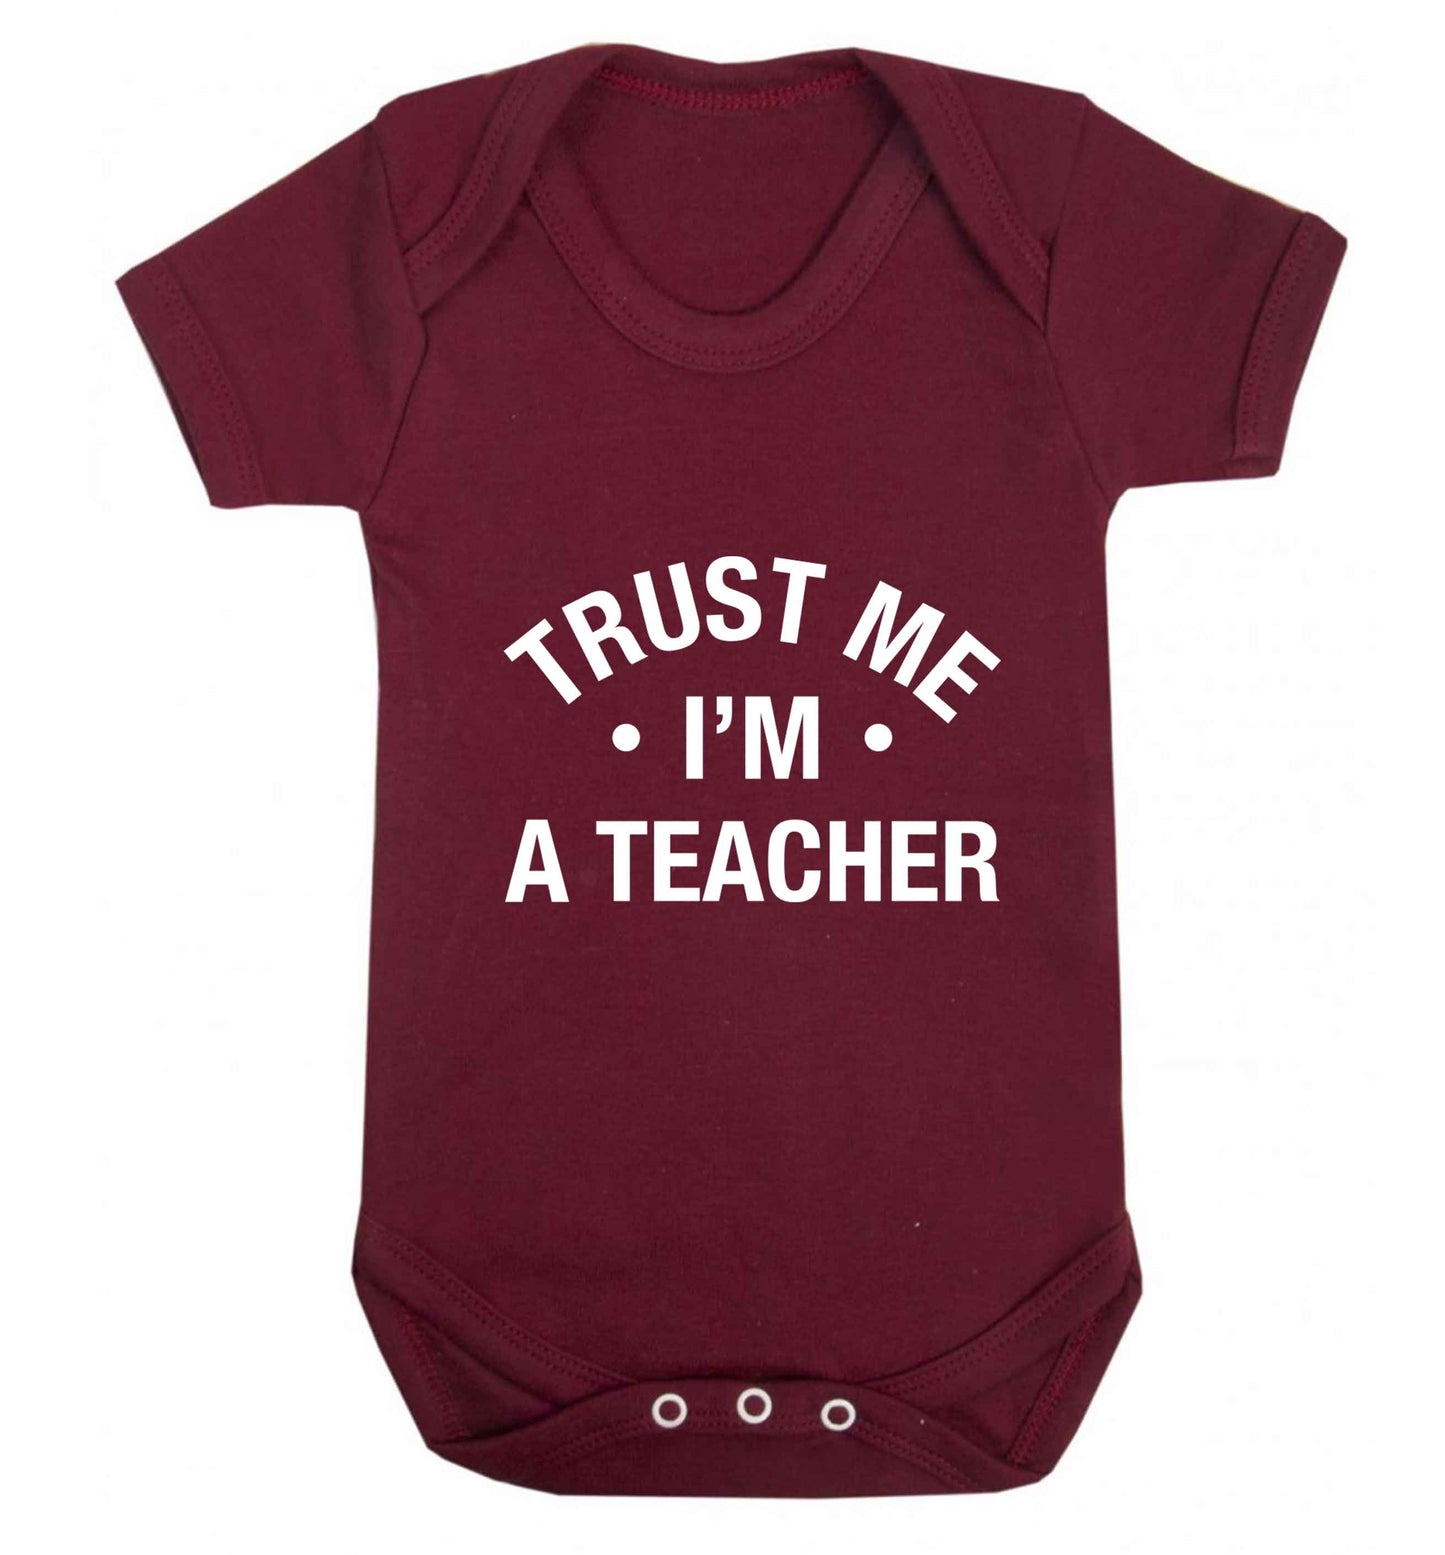 Trust me I'm a teacher baby vest maroon 18-24 months